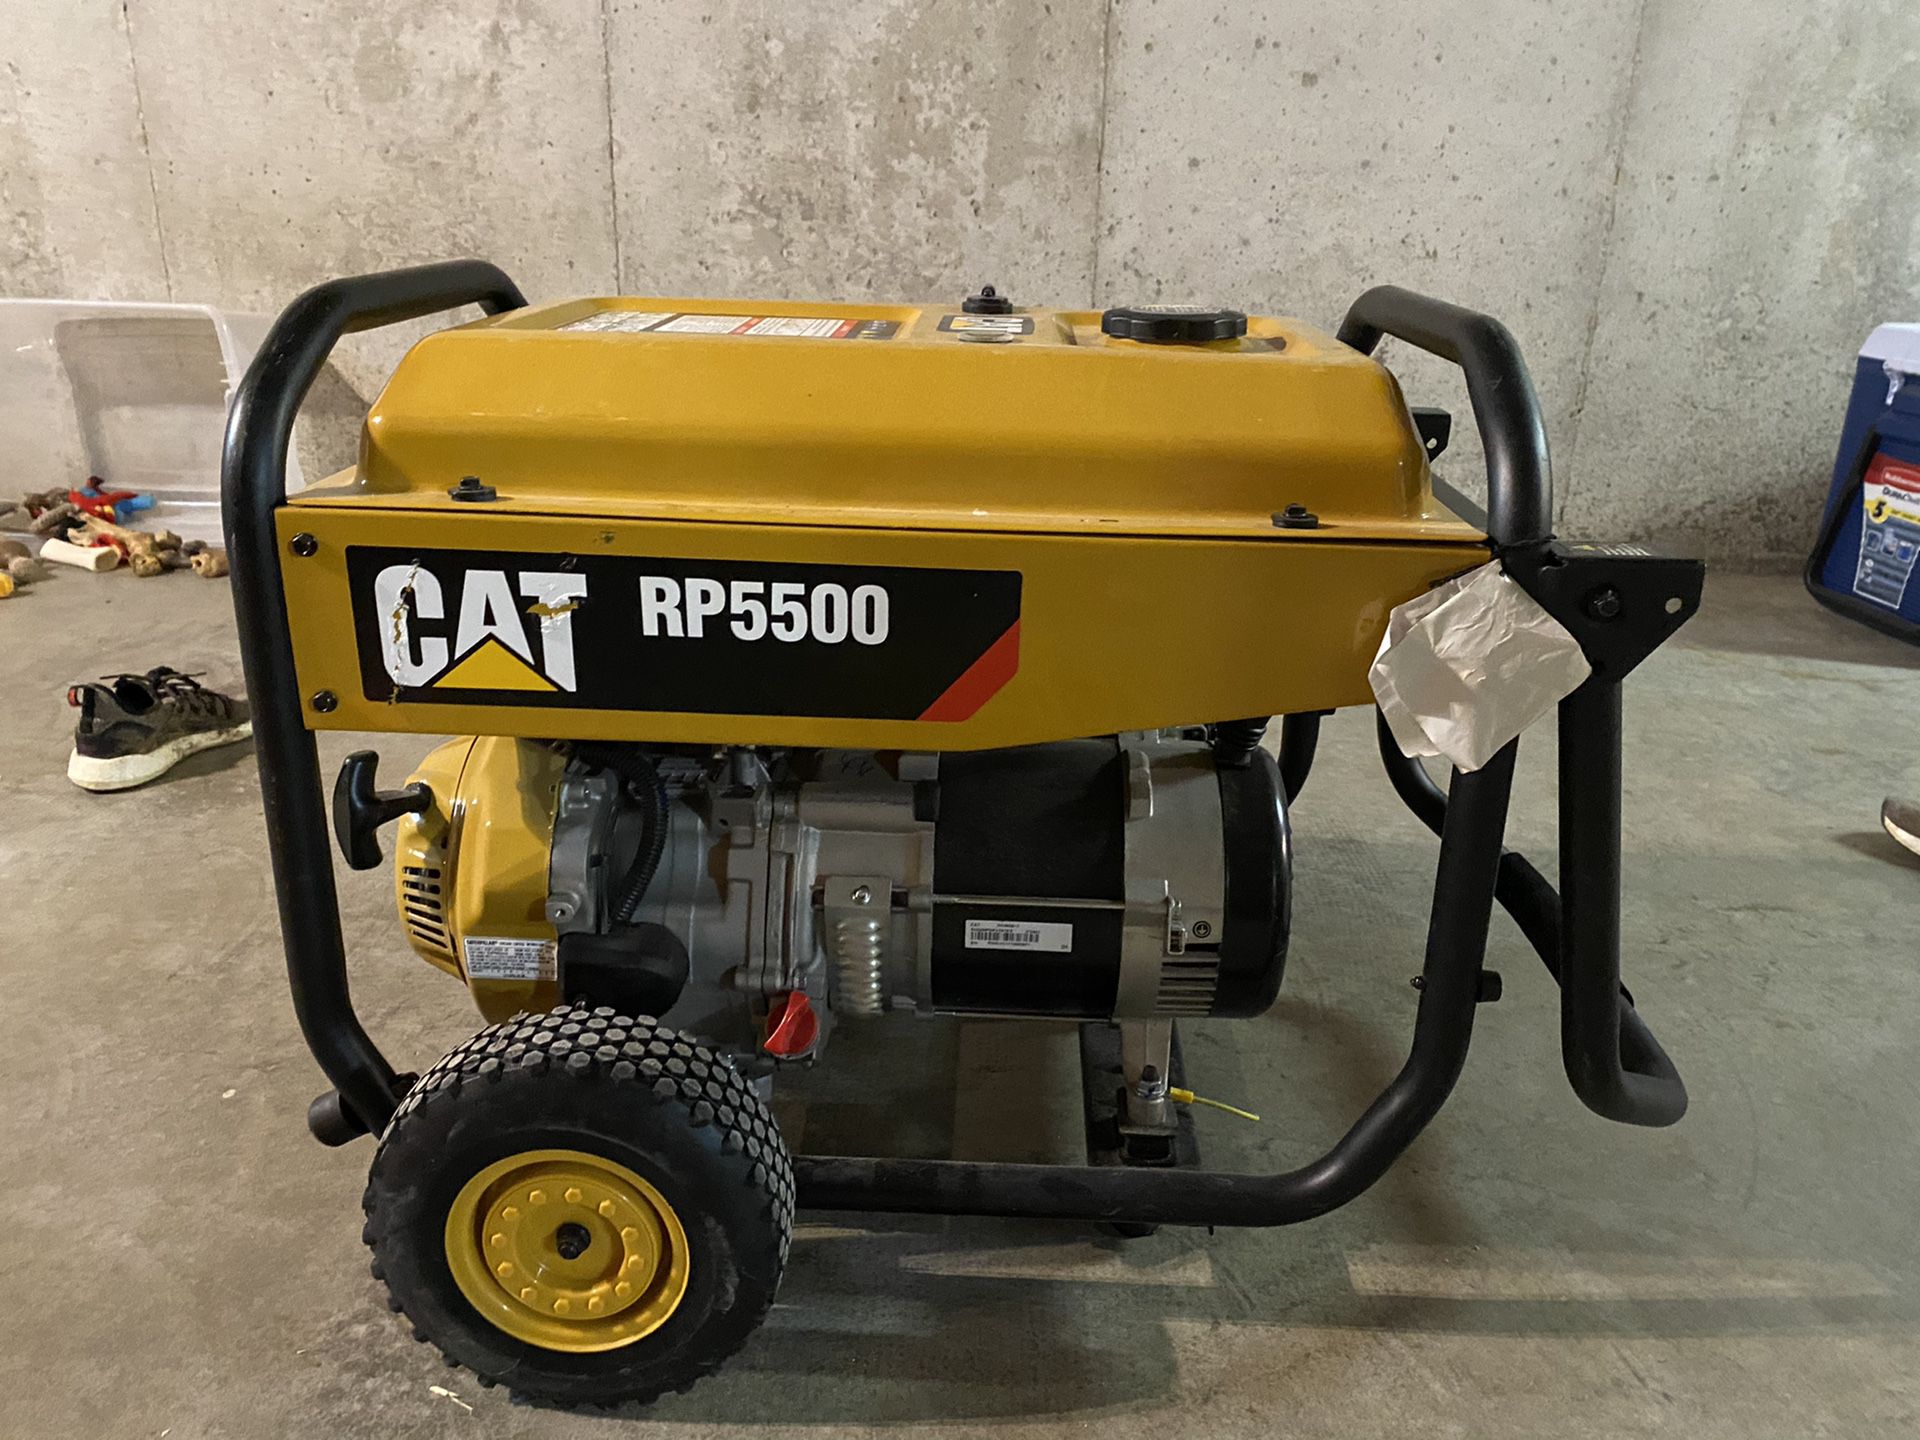 CAT gas powered generator 5500 watt ...6500 watt peak